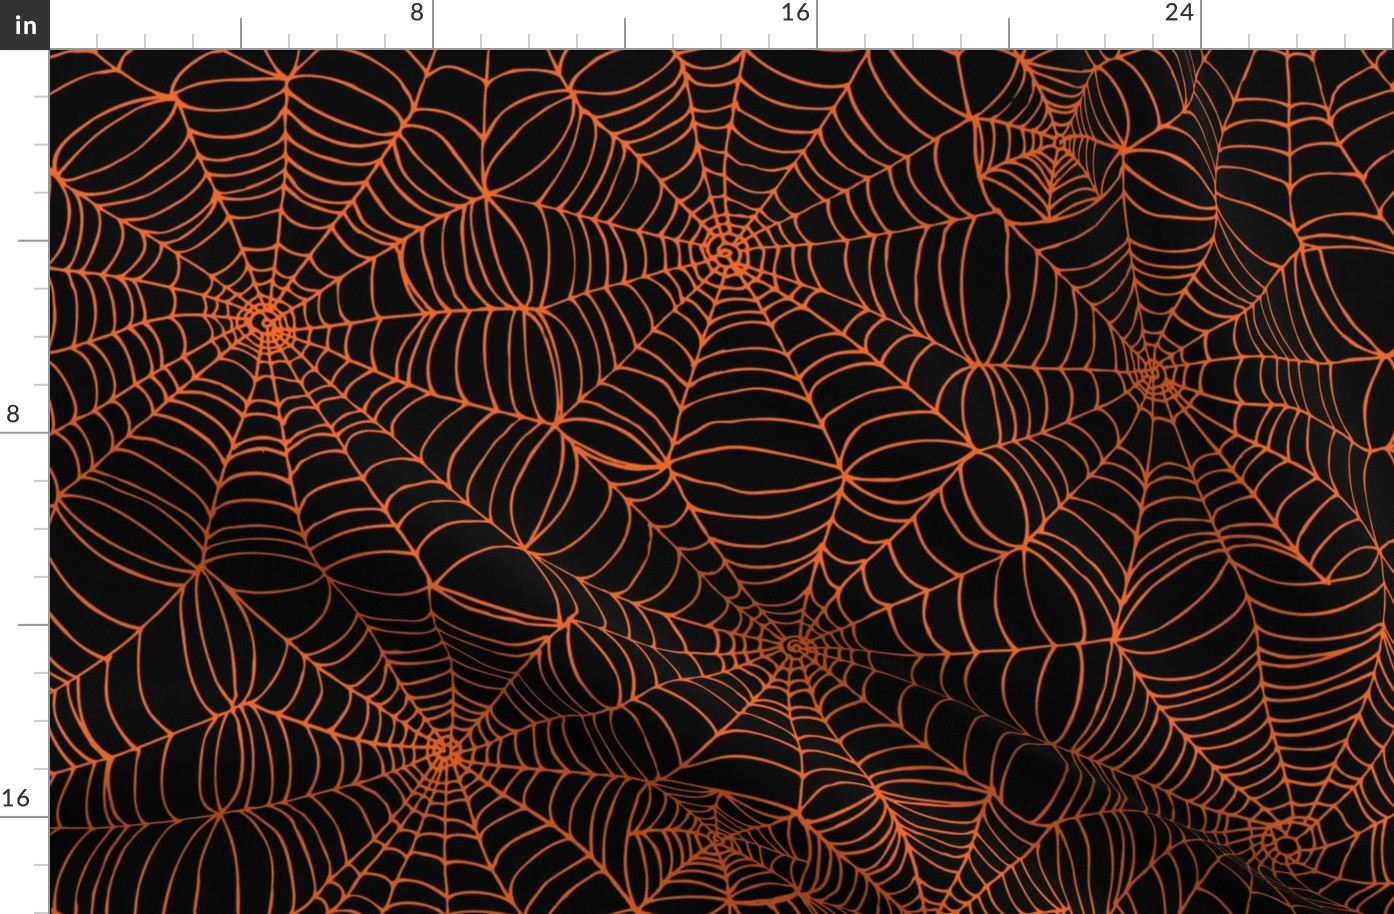 Spiderwebs -   Orange on black, large scale